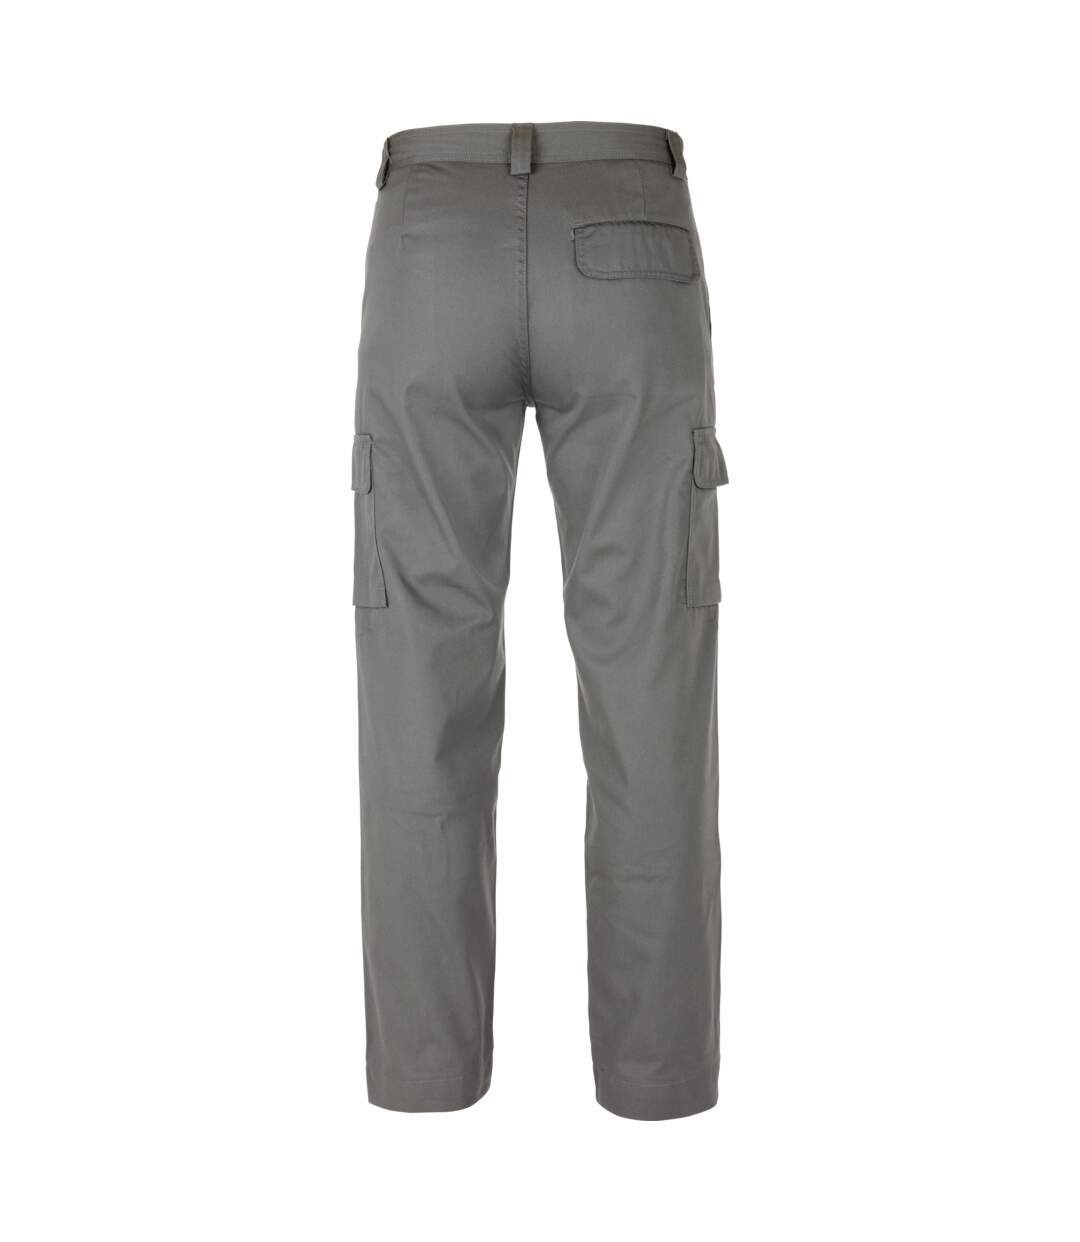 Pantalon de travail Classic Würth MODYF gris